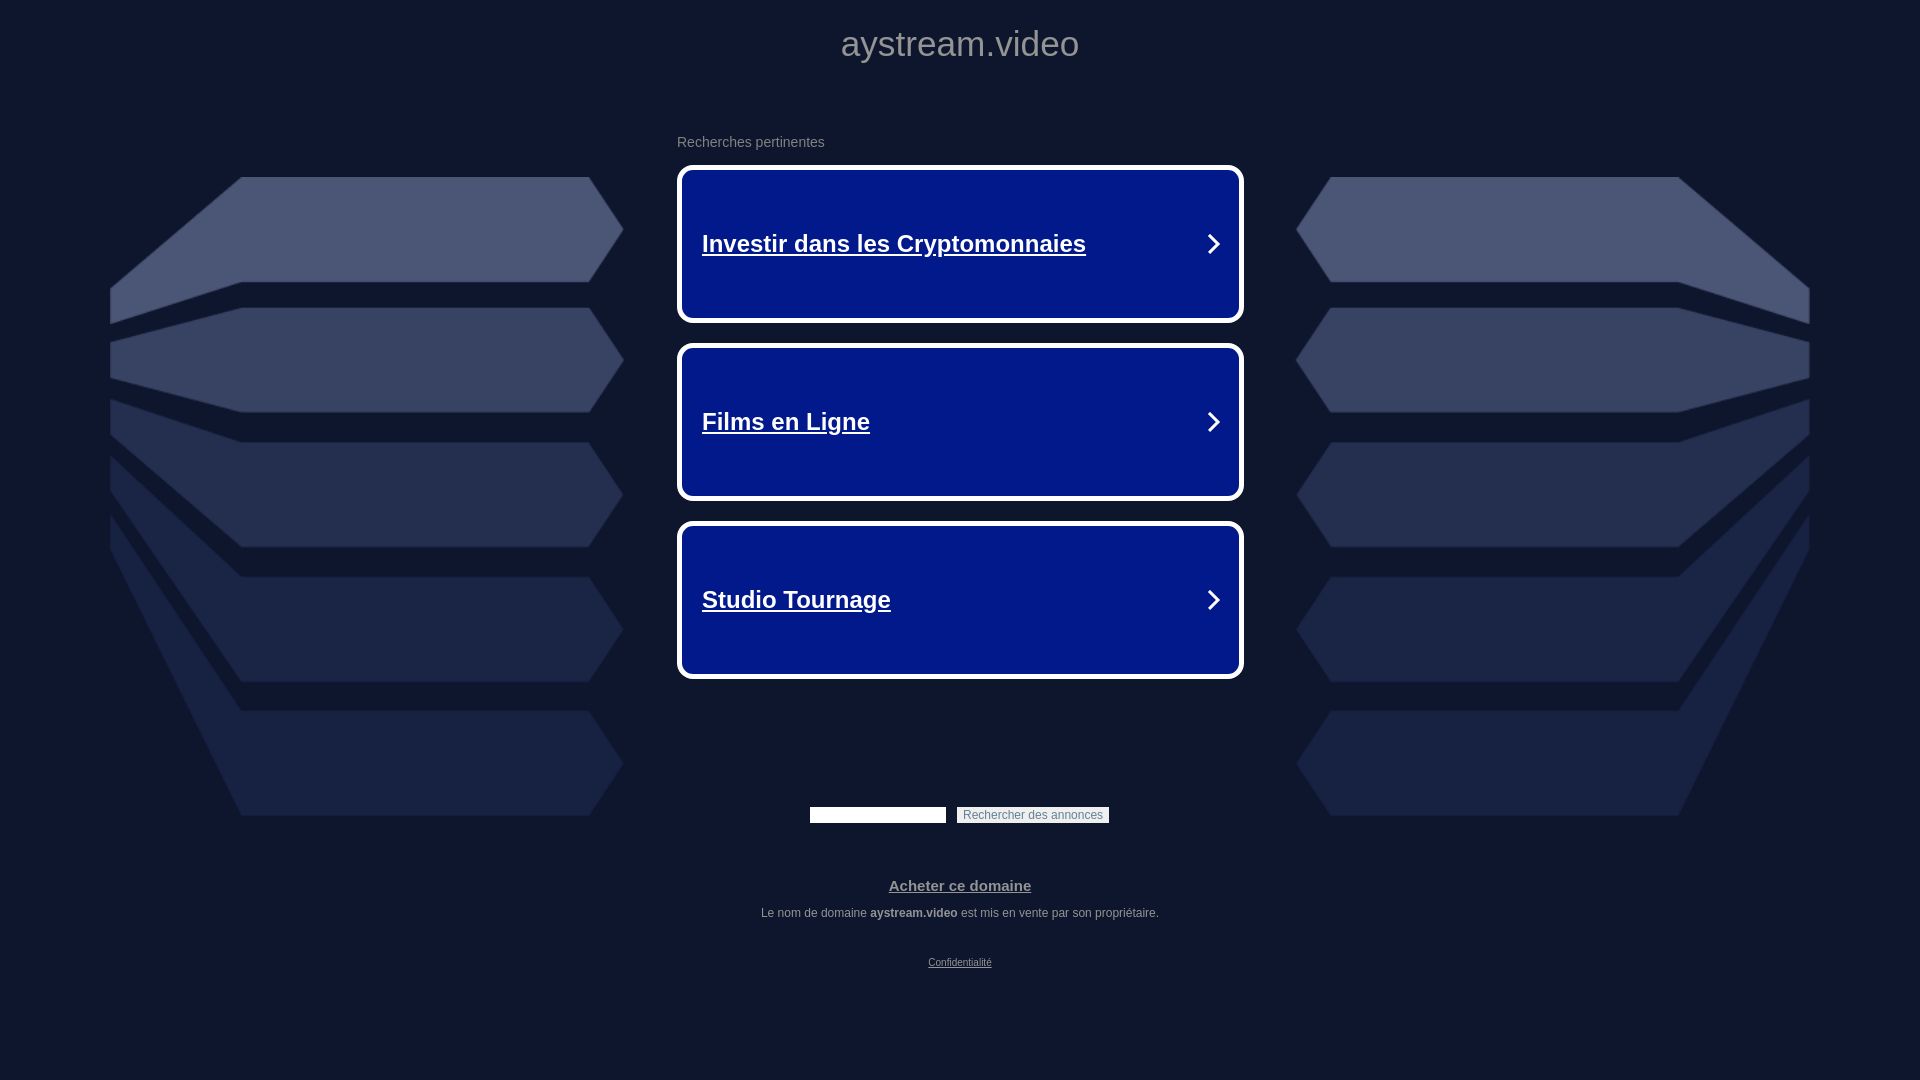 Status do site webtv.aystream.video está   ONLINE